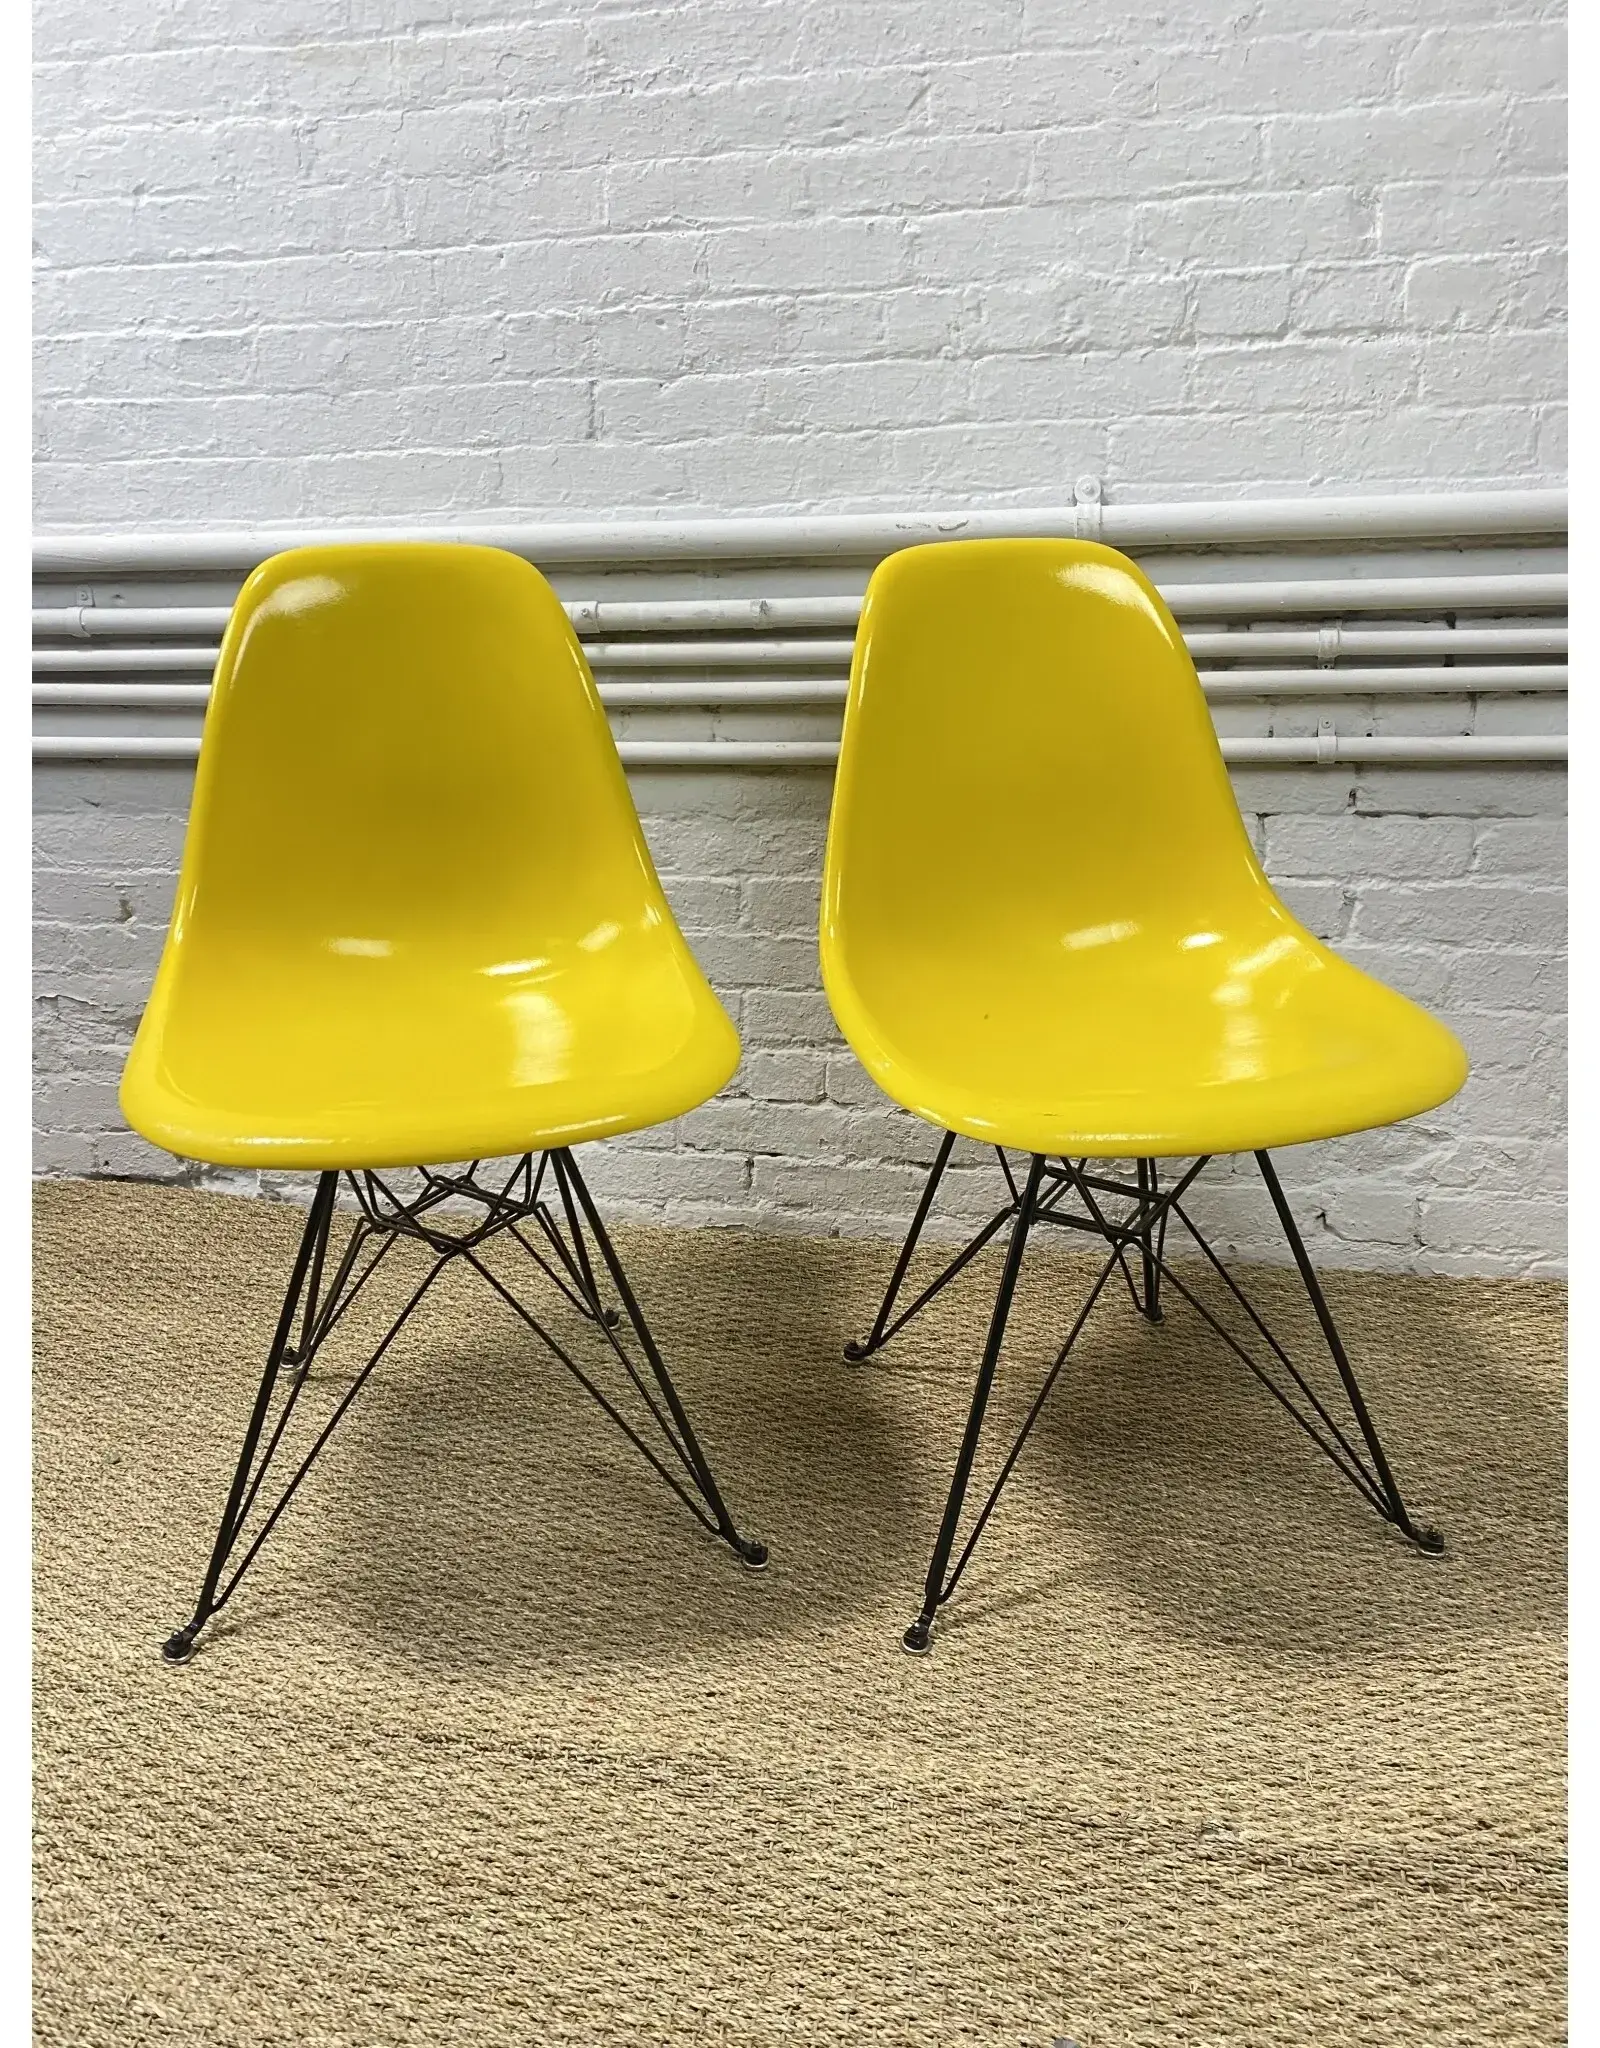 BK Modernica Eiffel Case Study Chair in Sunflower Yellow